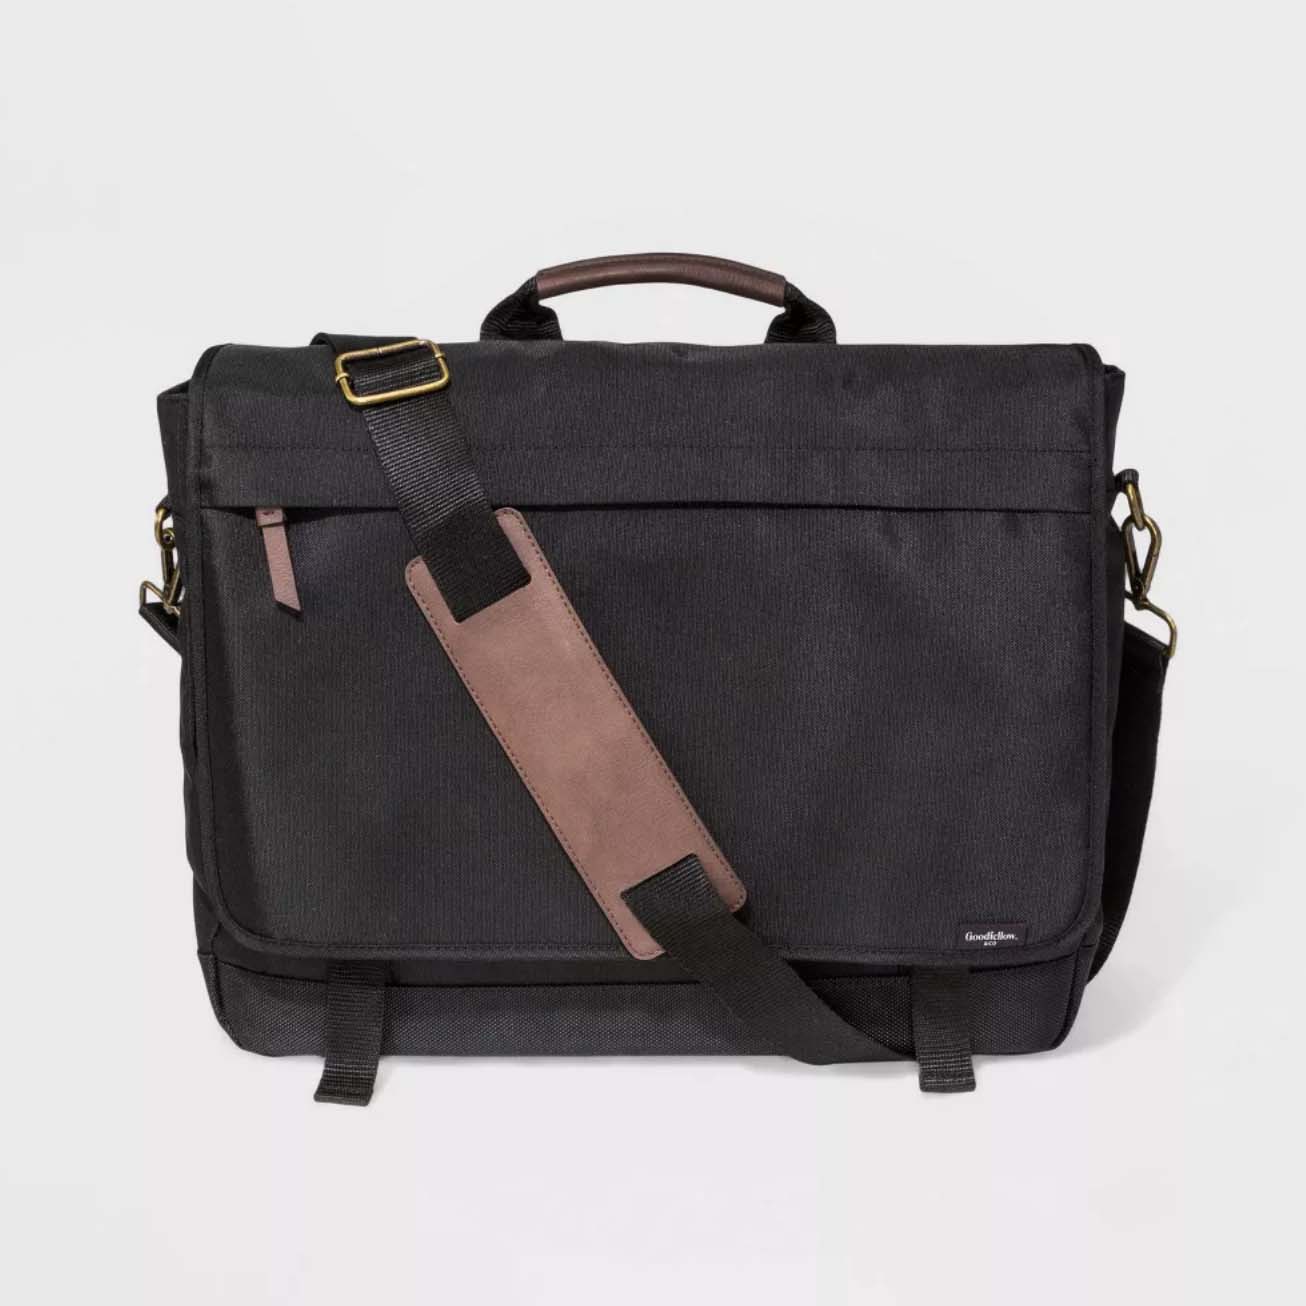 Black and brown messenger backpack